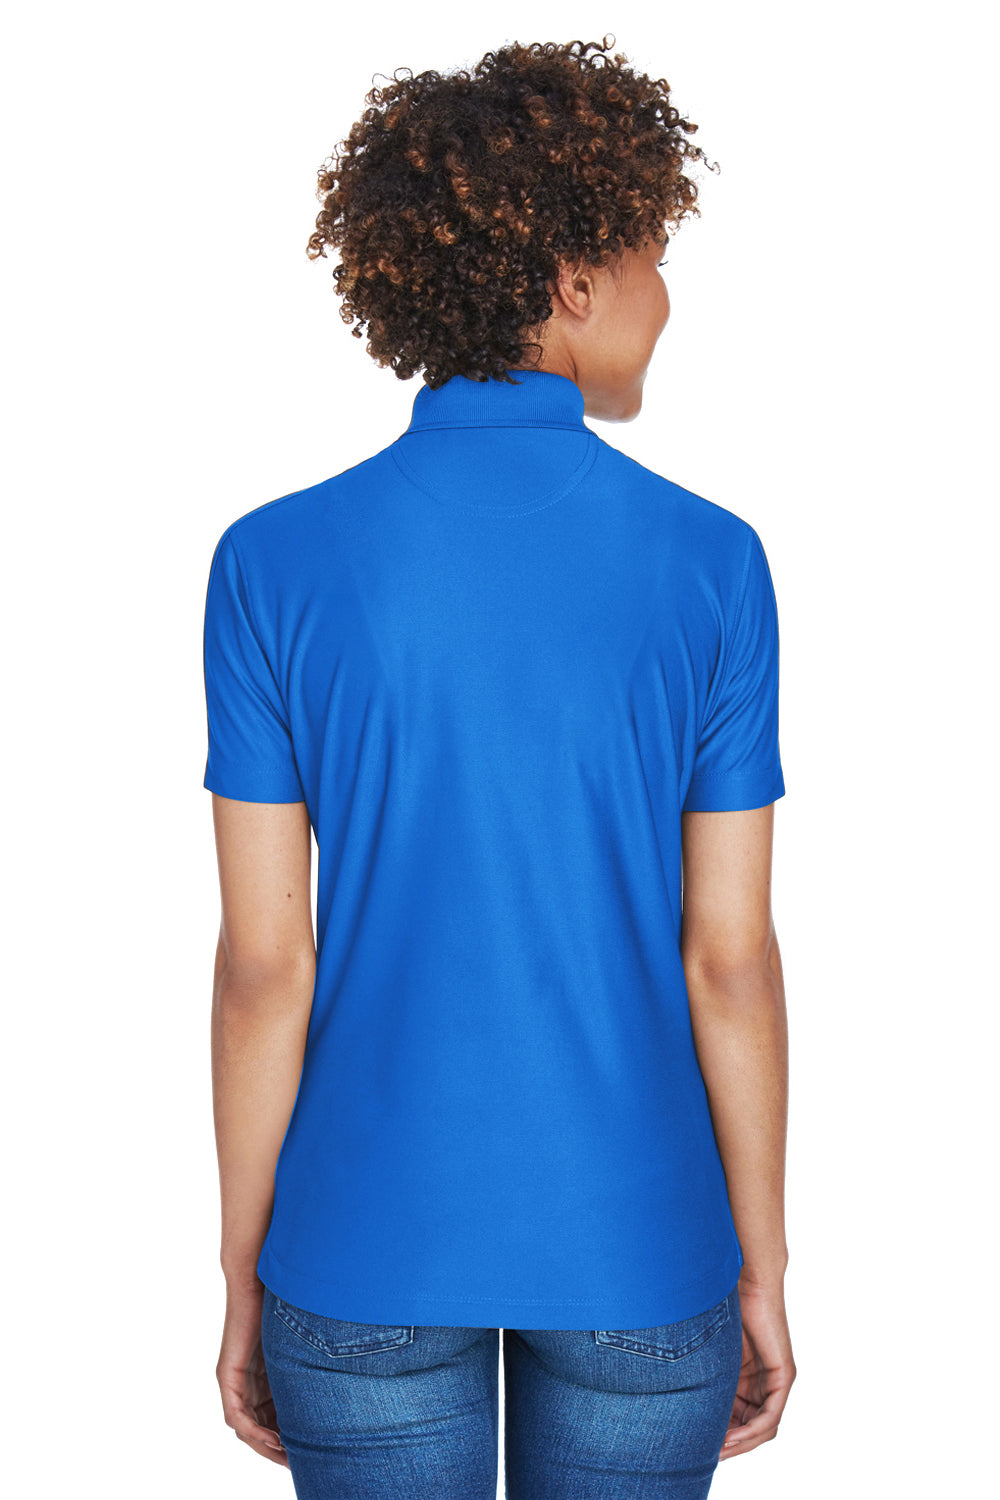 UltraClub 8414 Womens Cool & Dry Elite Performance Moisture Wicking Short Sleeve Polo Shirt Royal Blue Back